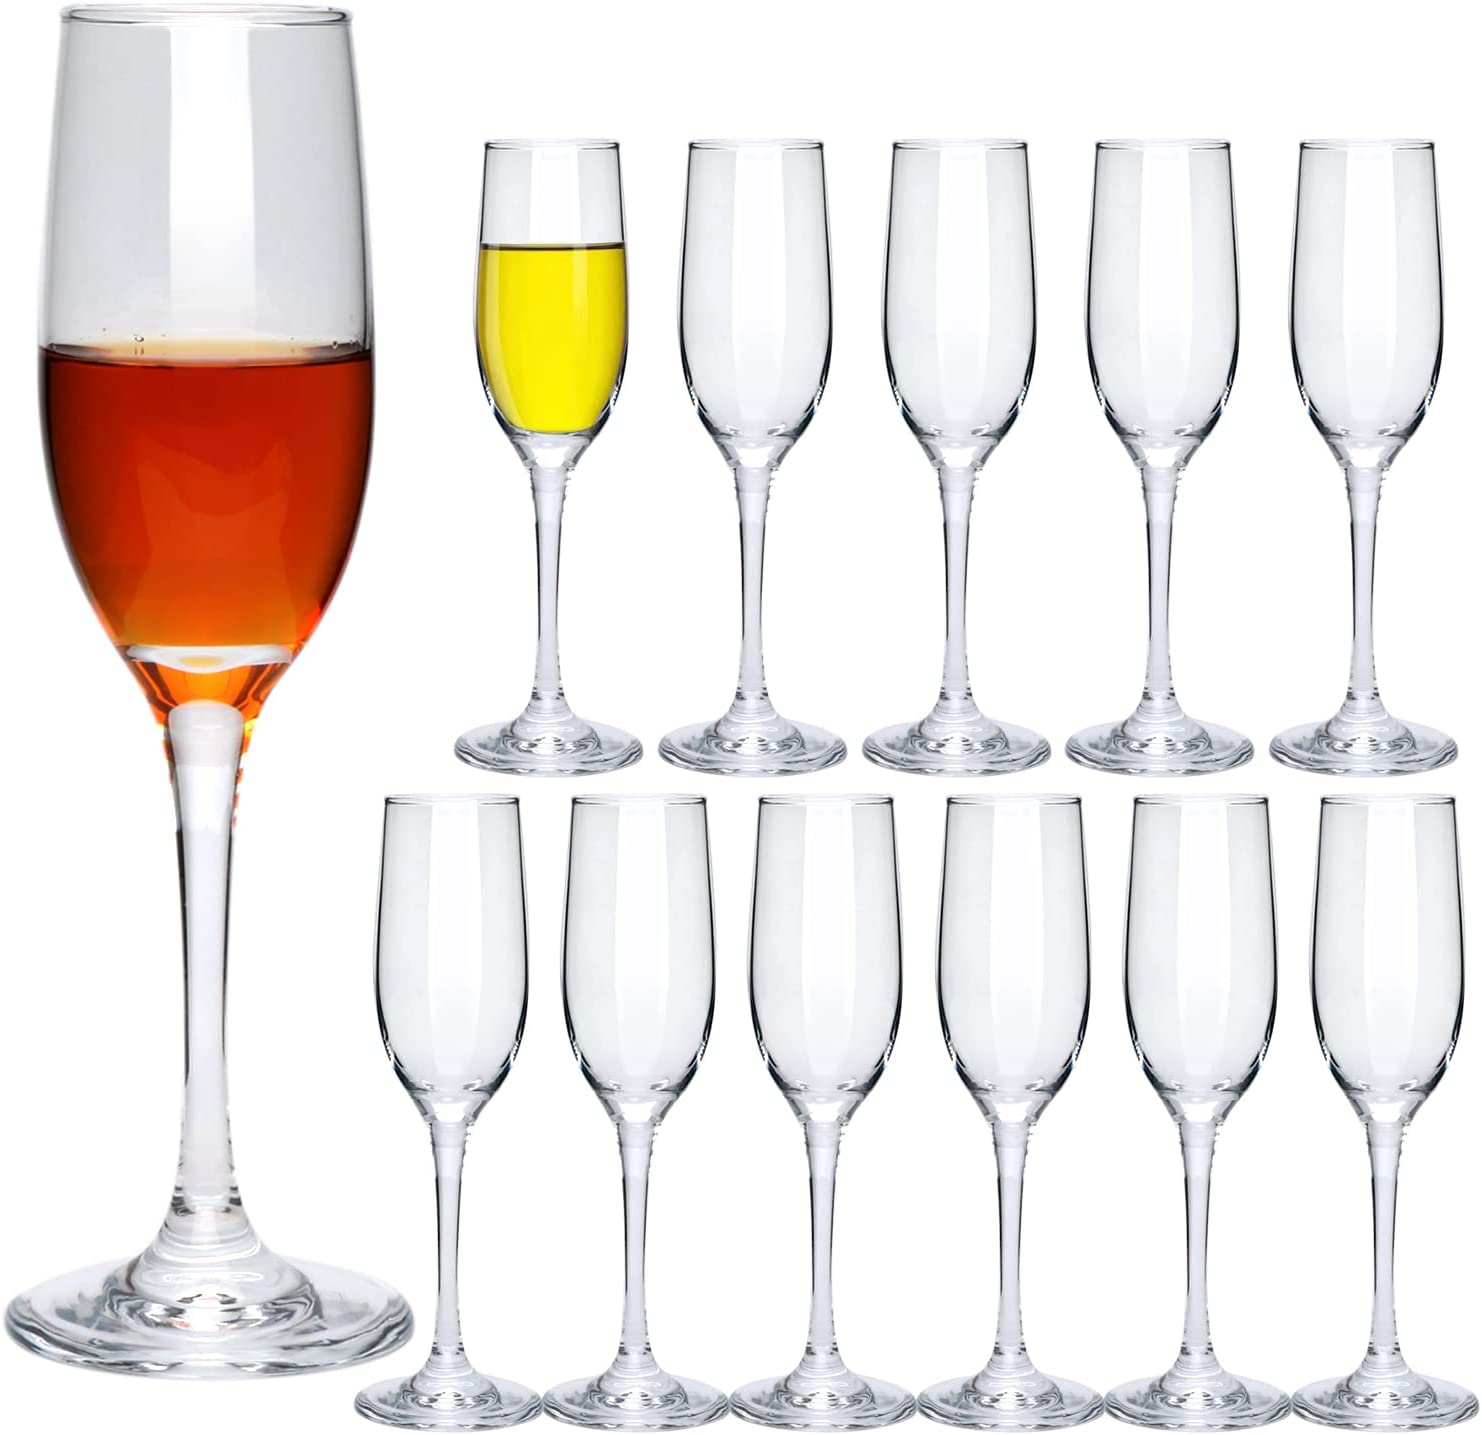 UMEIED Champagne Flutes Set of 12, 6 Oz Premium Glasses Transparent